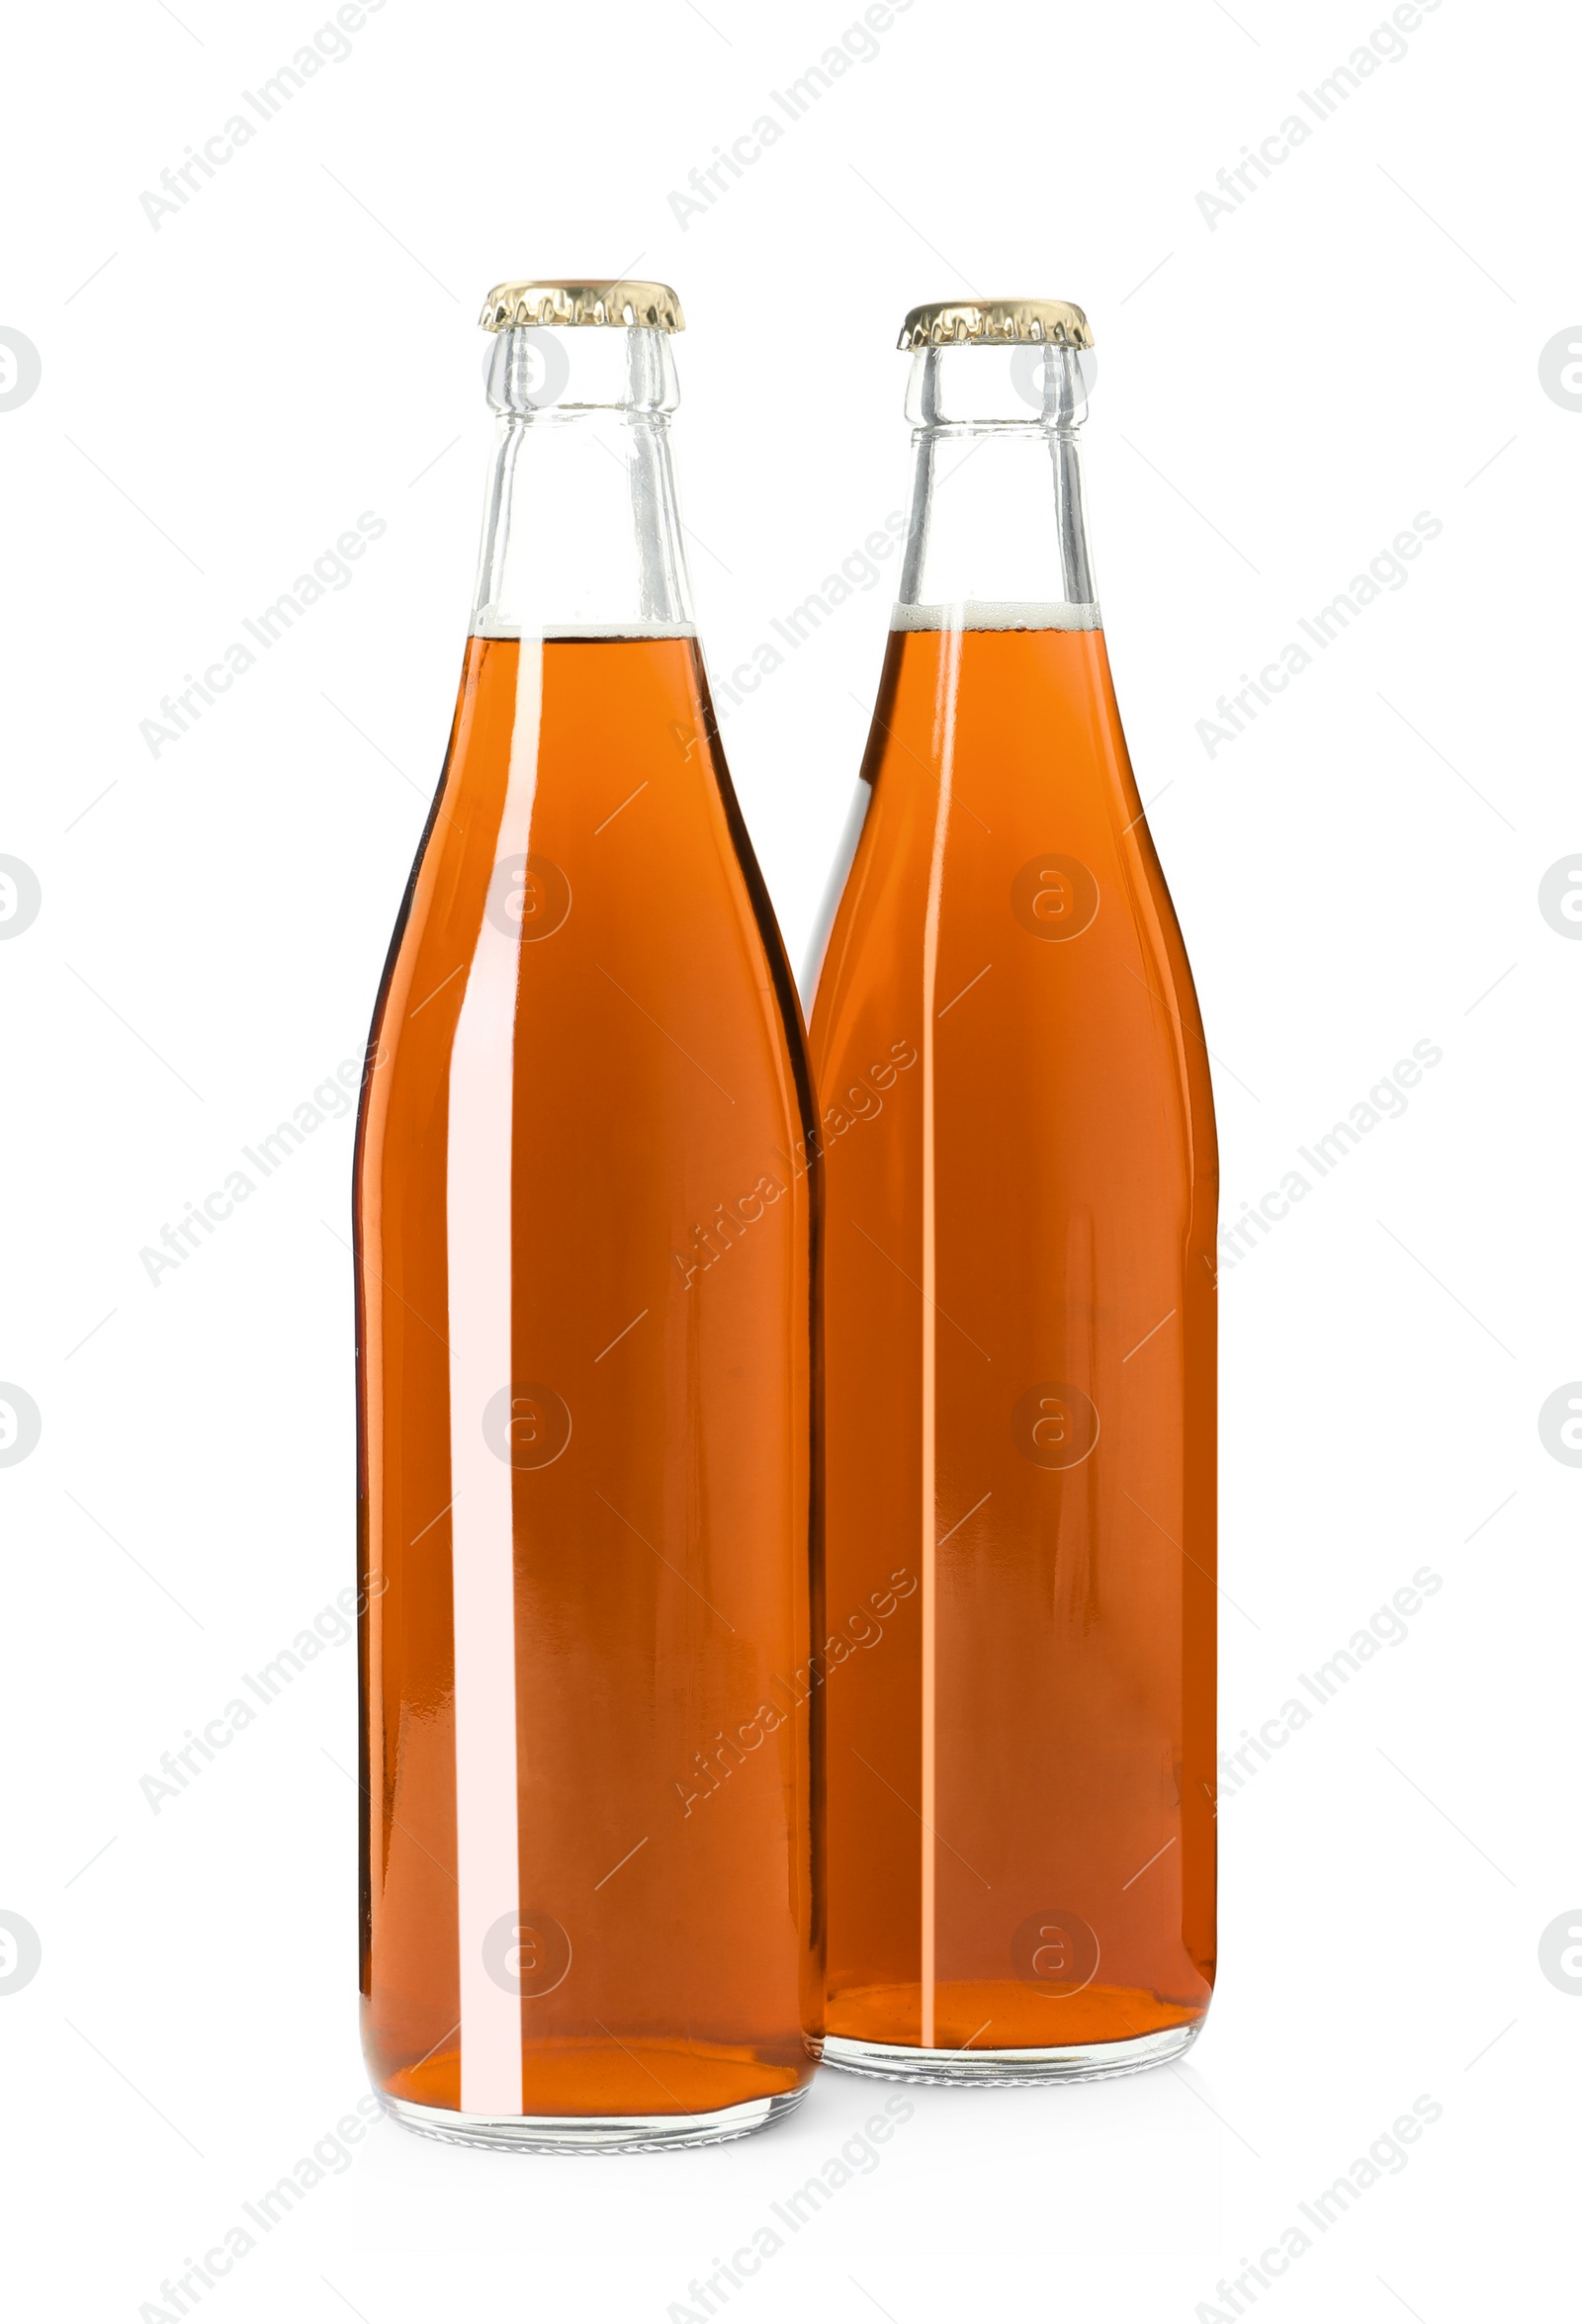 Photo of Bottles of delicious fresh kvass isolated on white